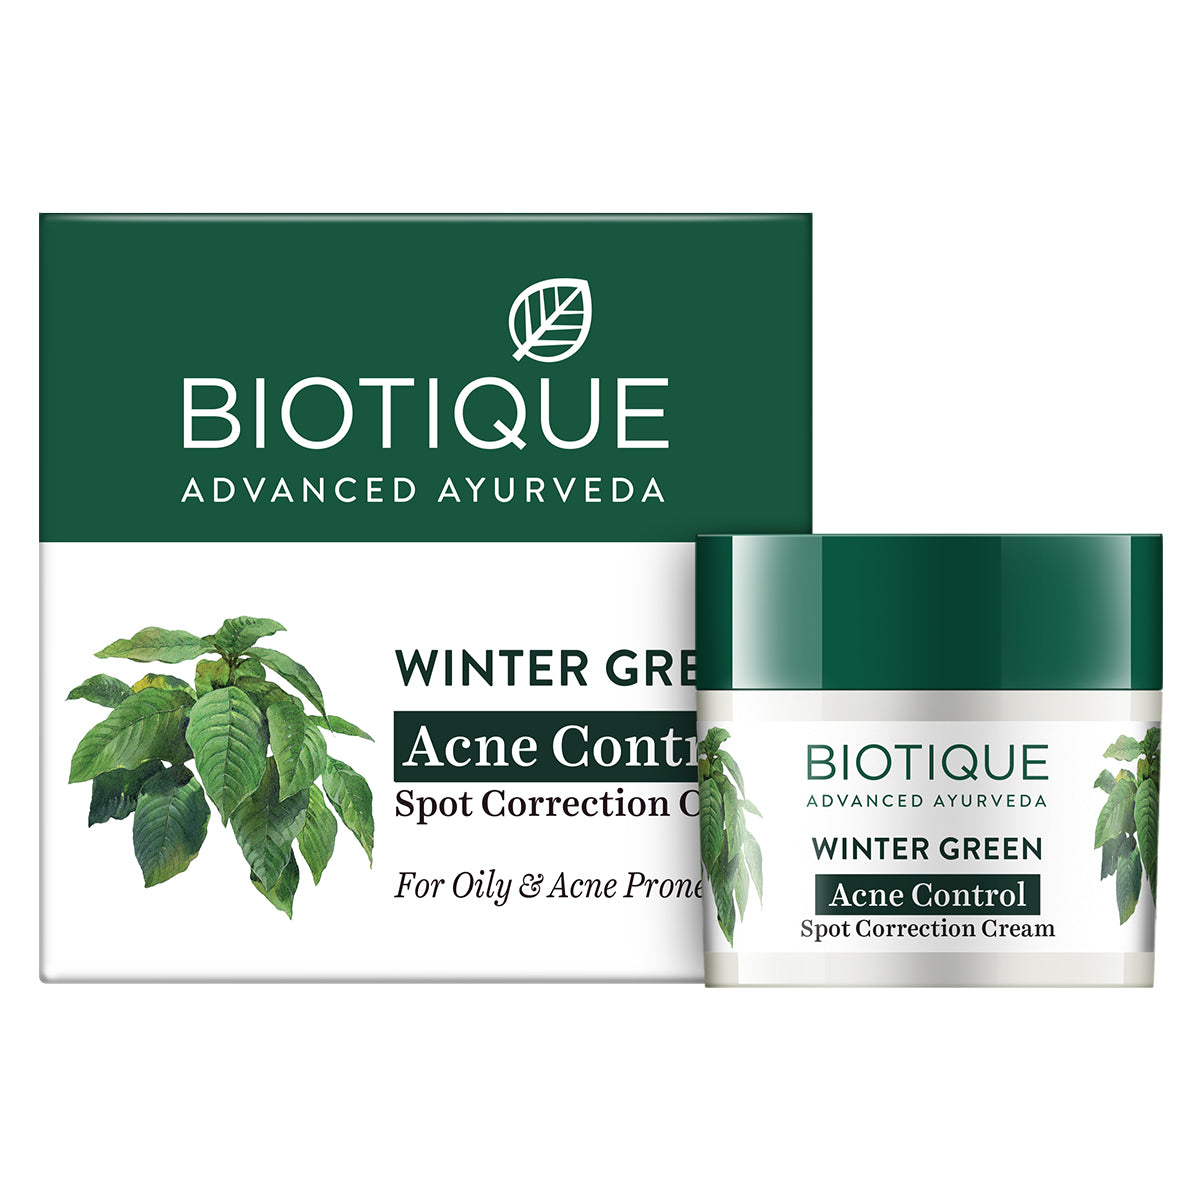 Biotique Winter Green Acne Control Spot Correction Cream 15g